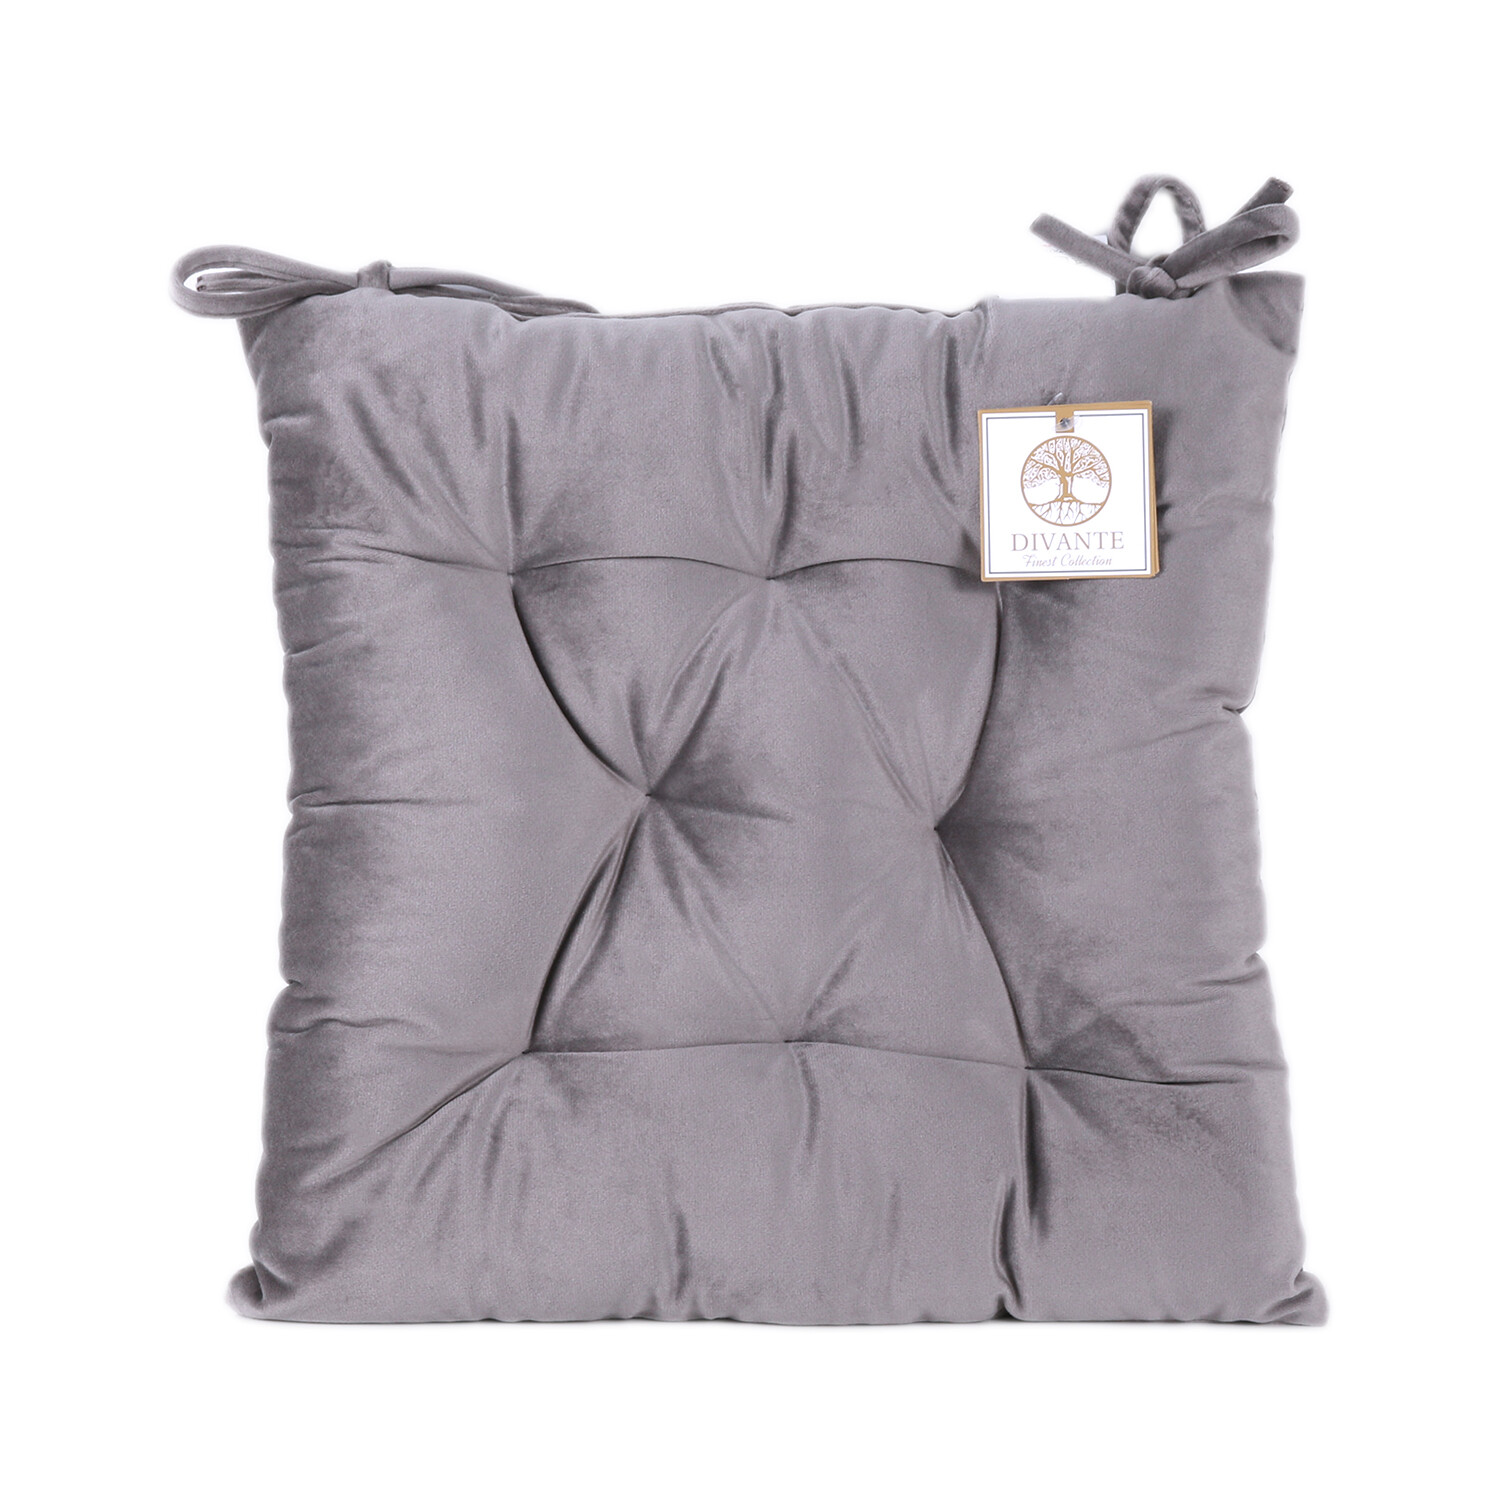 Divante Grey Velvet Seat Pad 40 x 40cm Image